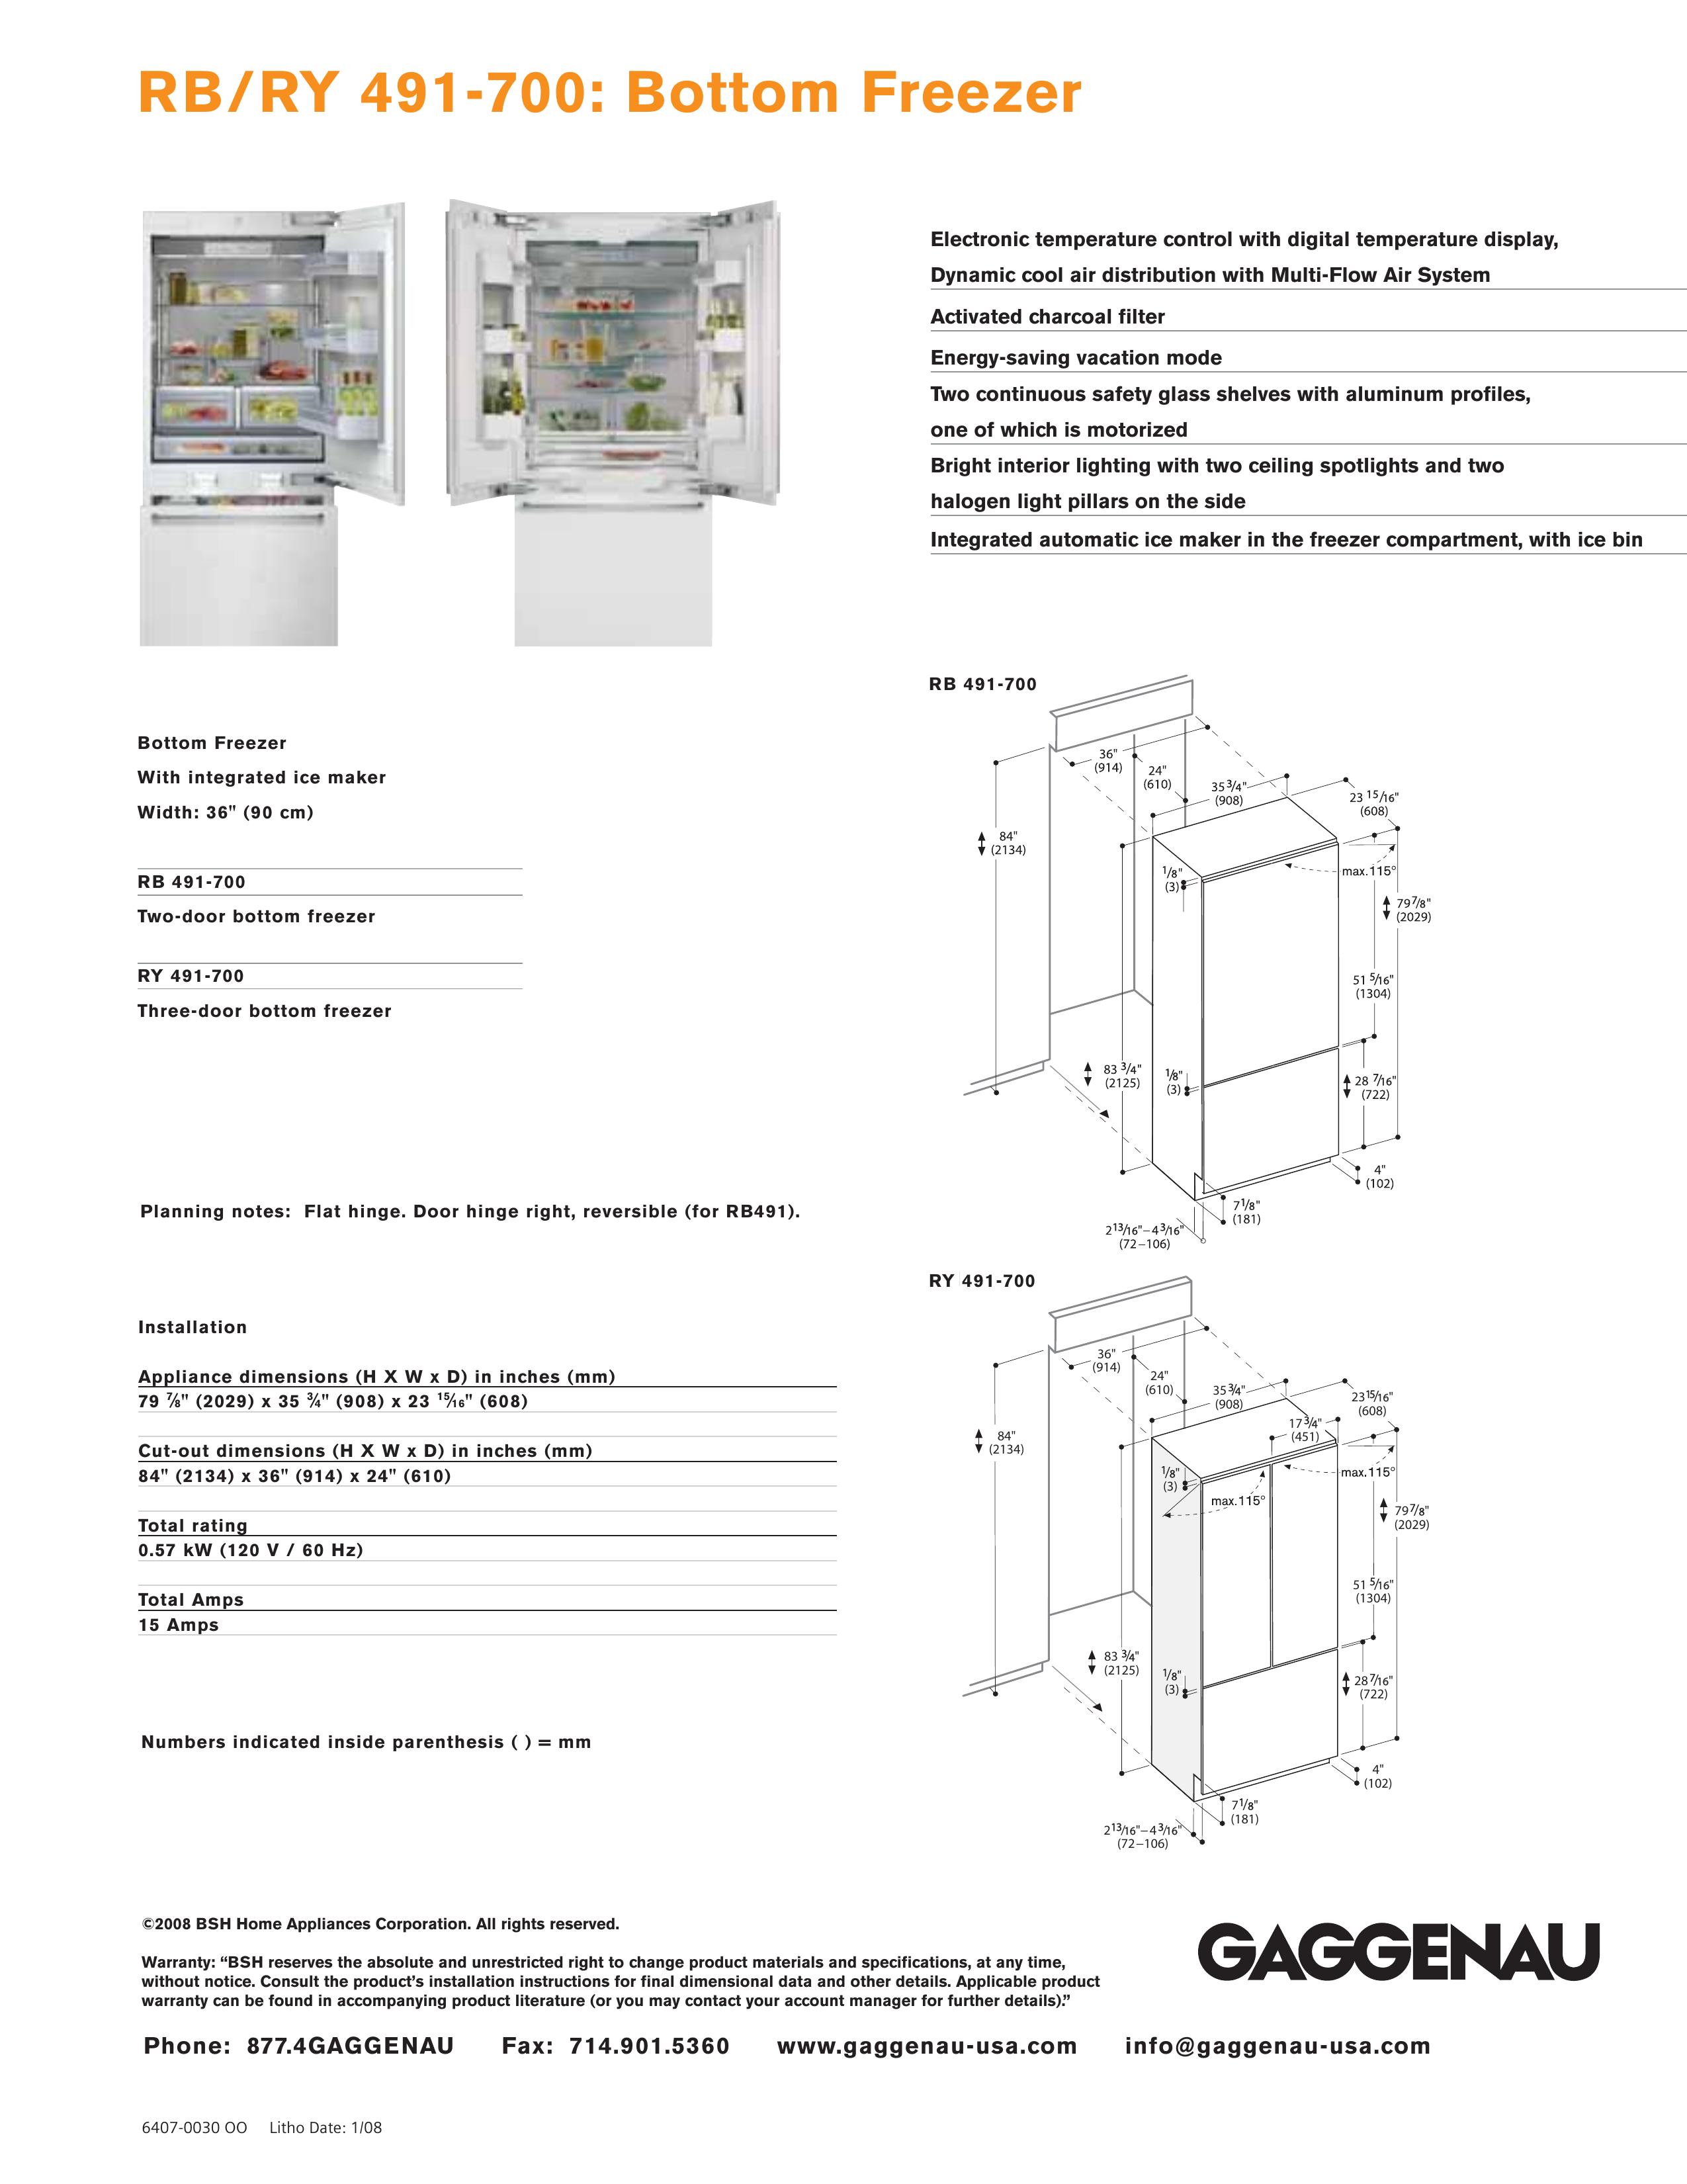 Gaggenau RB/RY 491-700 Refrigerator User Manual